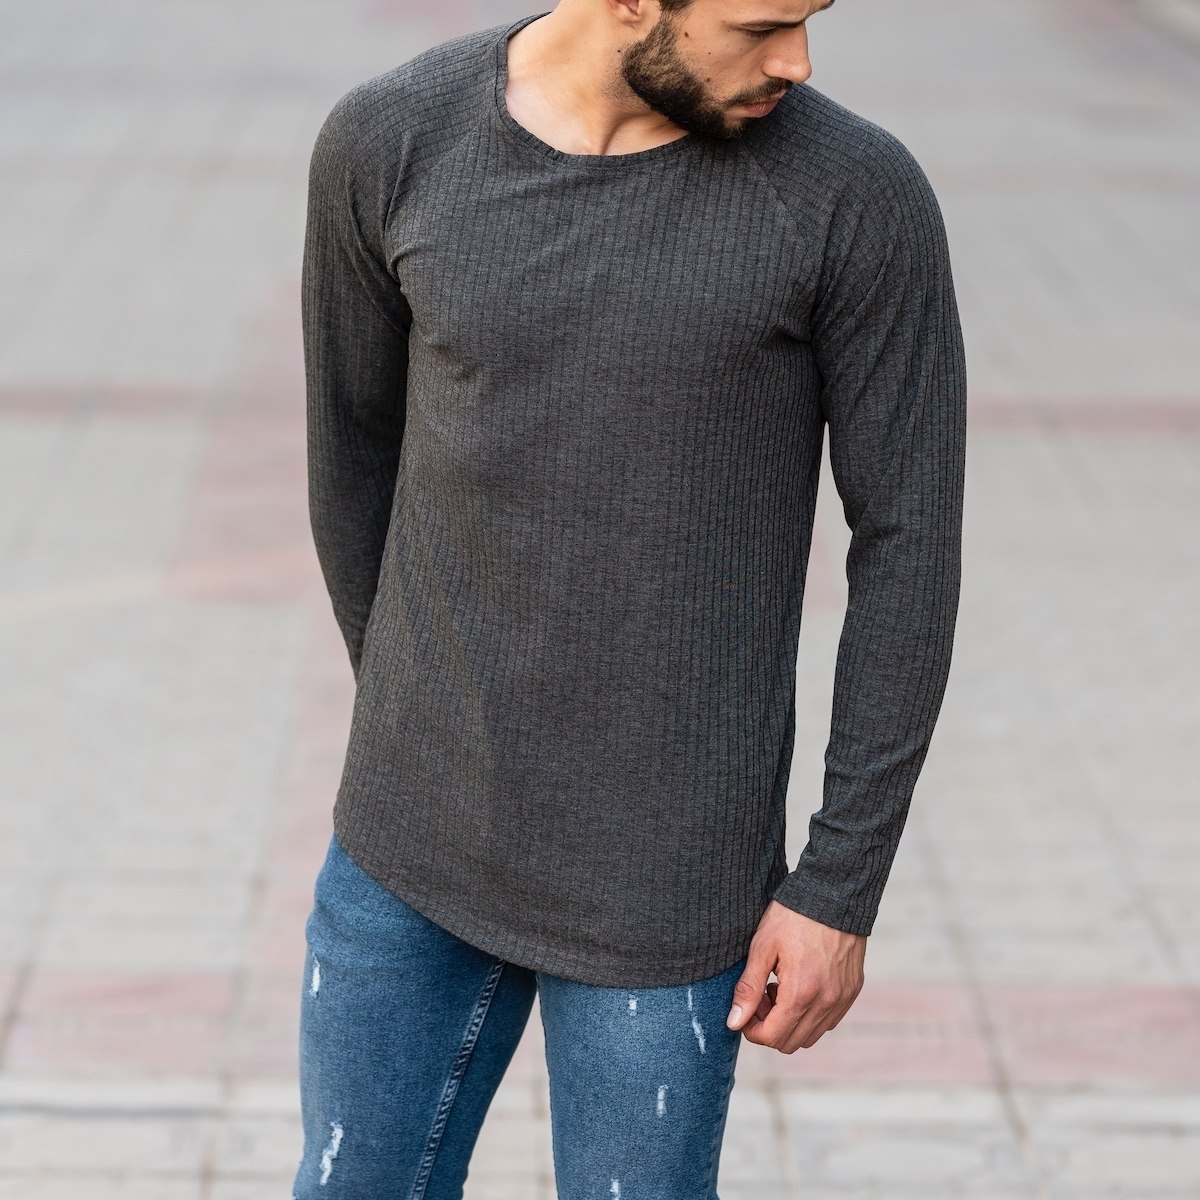 Gray Sweatshirt With Stripe Details - 4